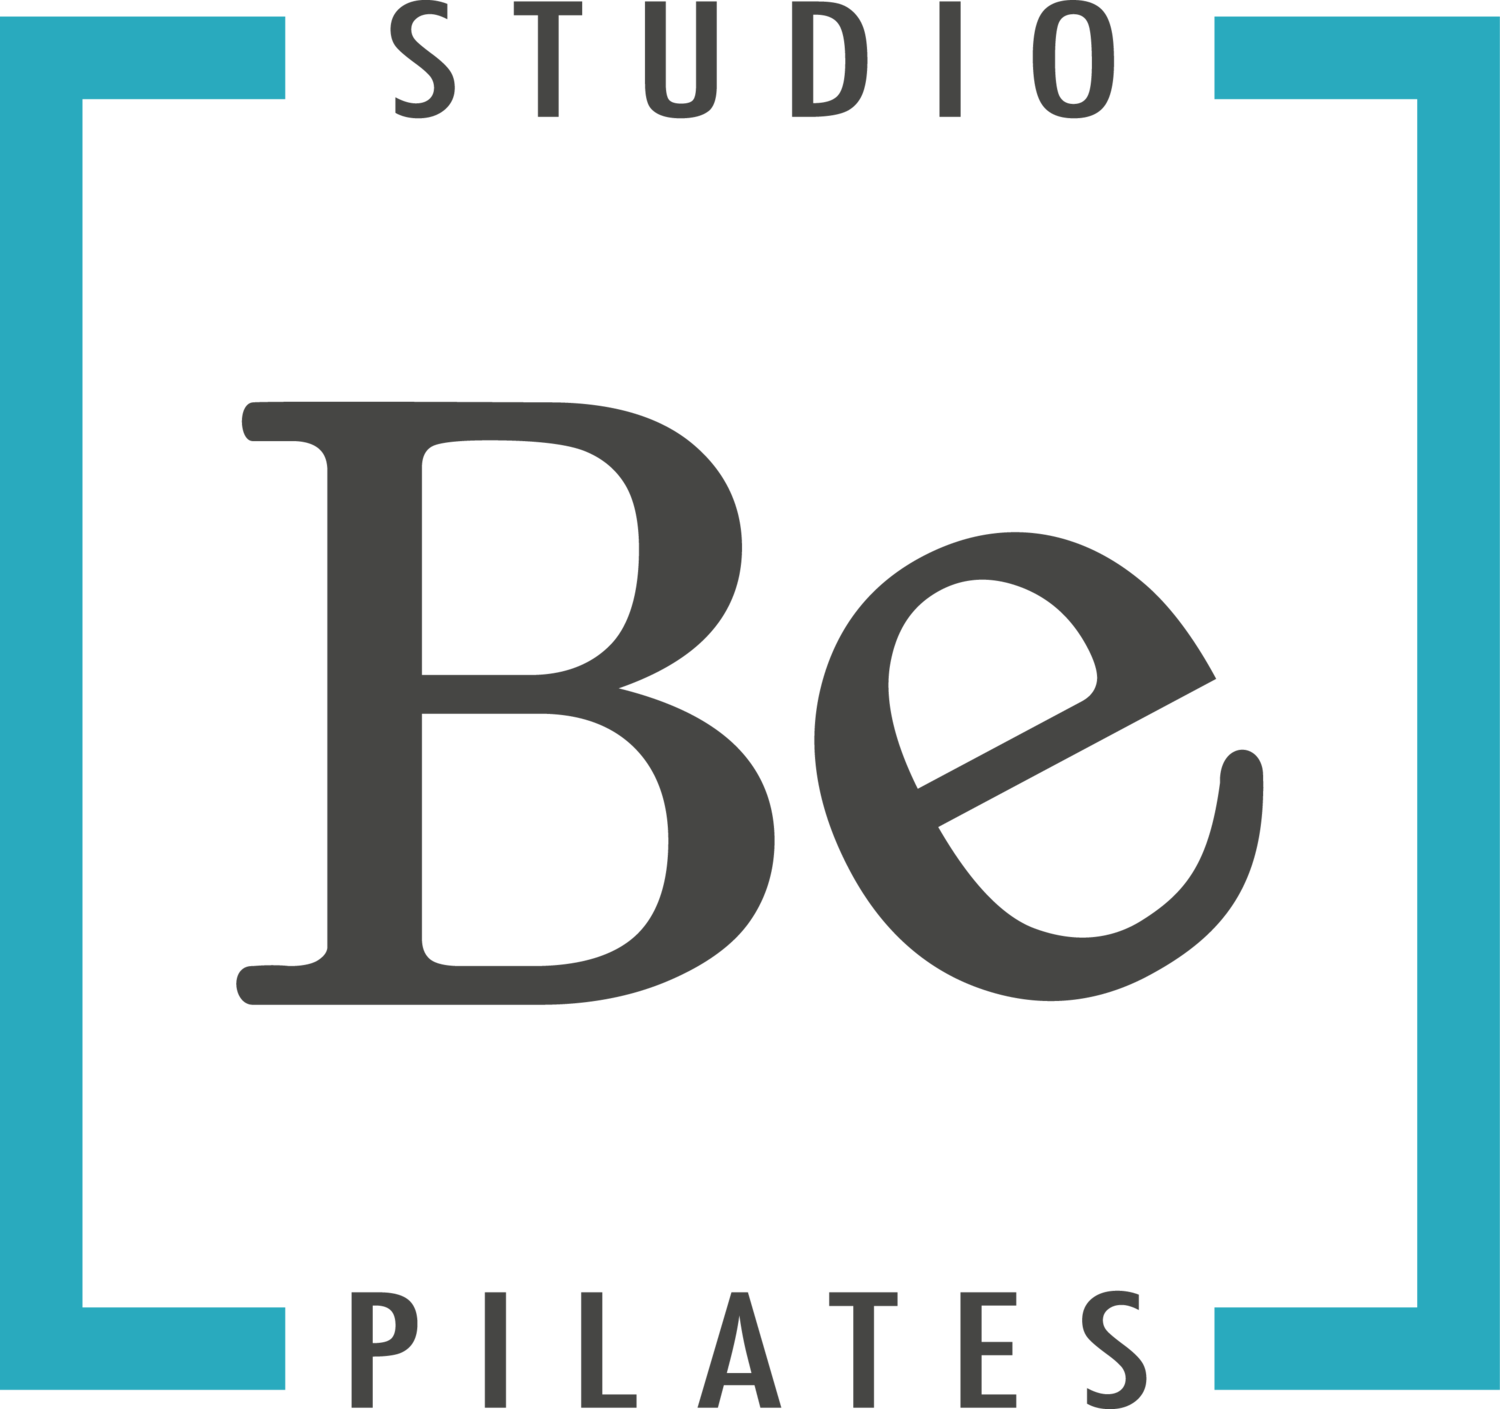 Pilates Studio Be Corpus Christi